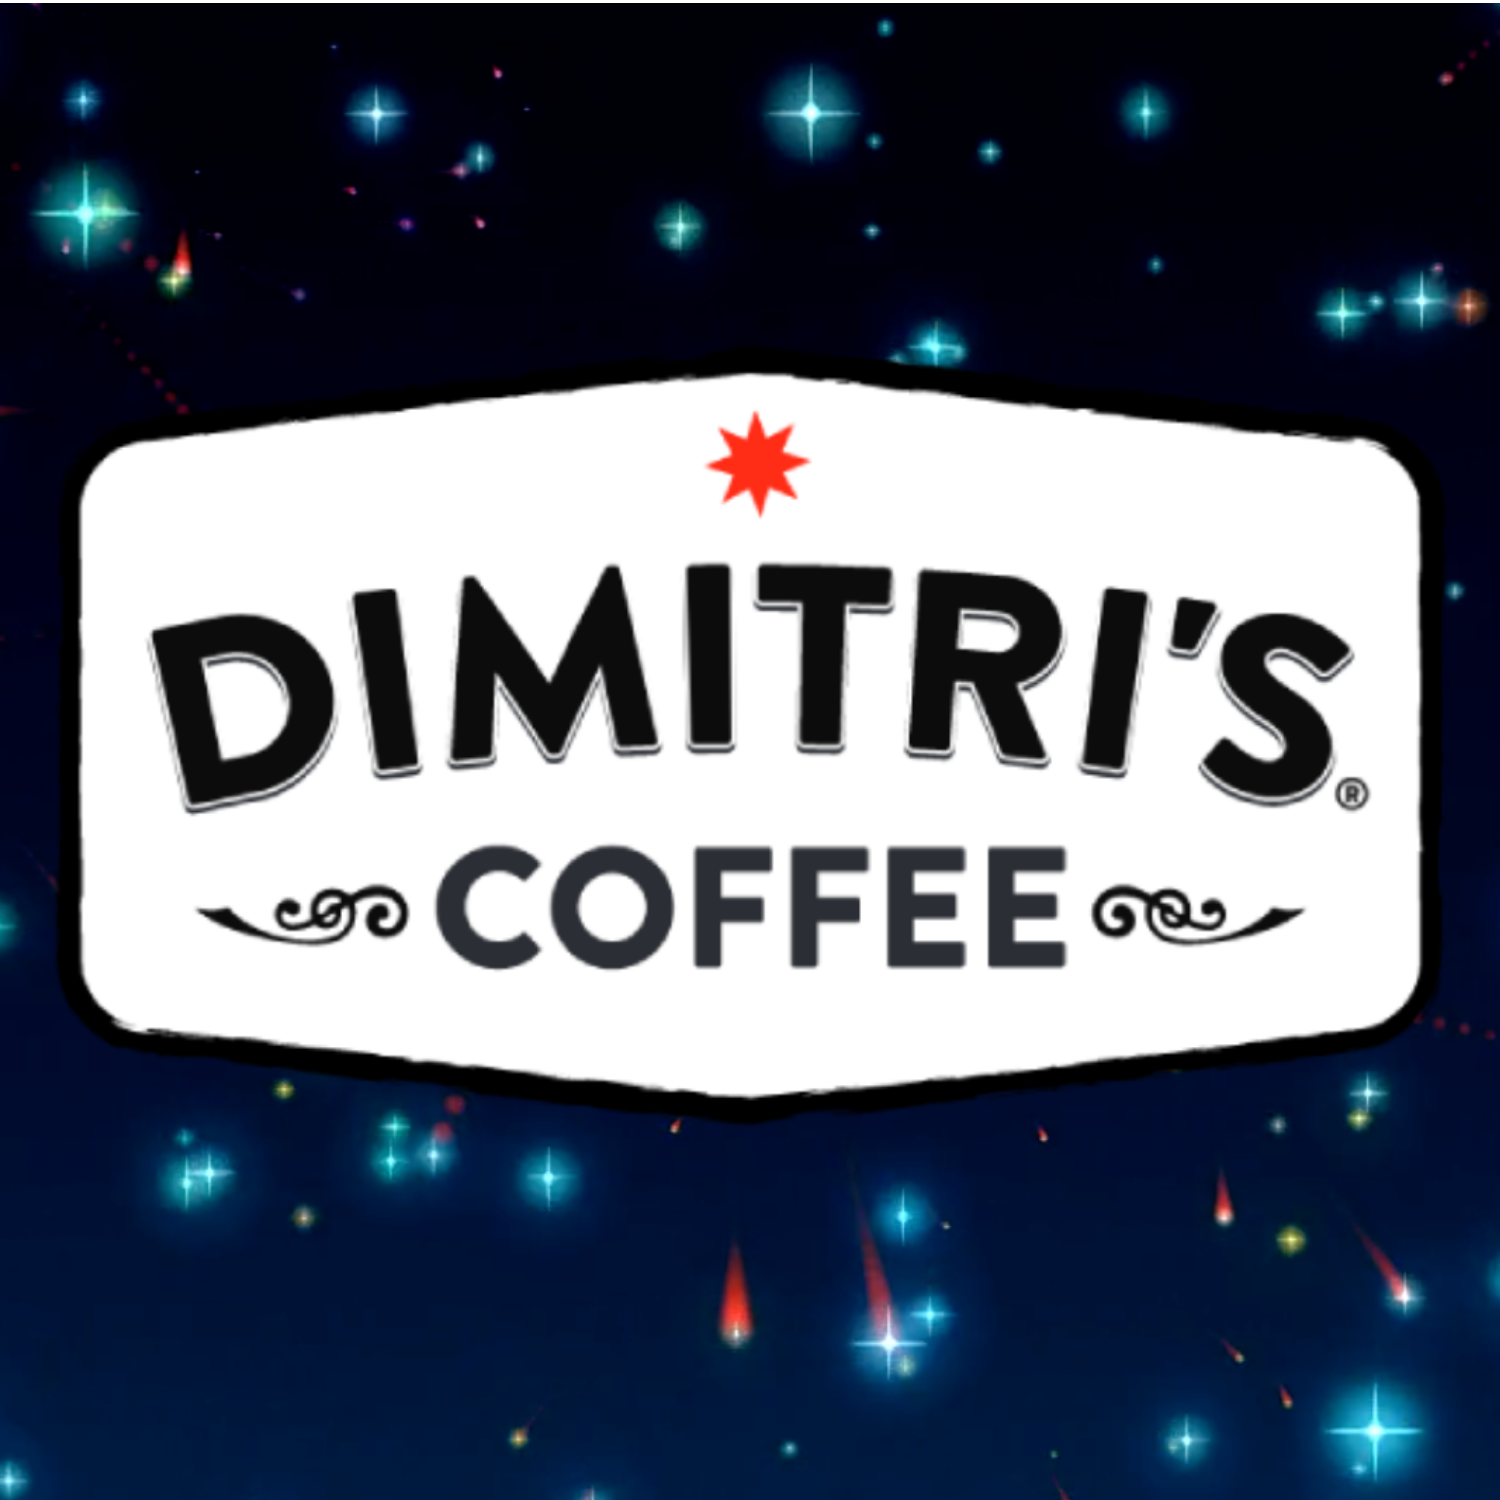 Dimitris Coffee